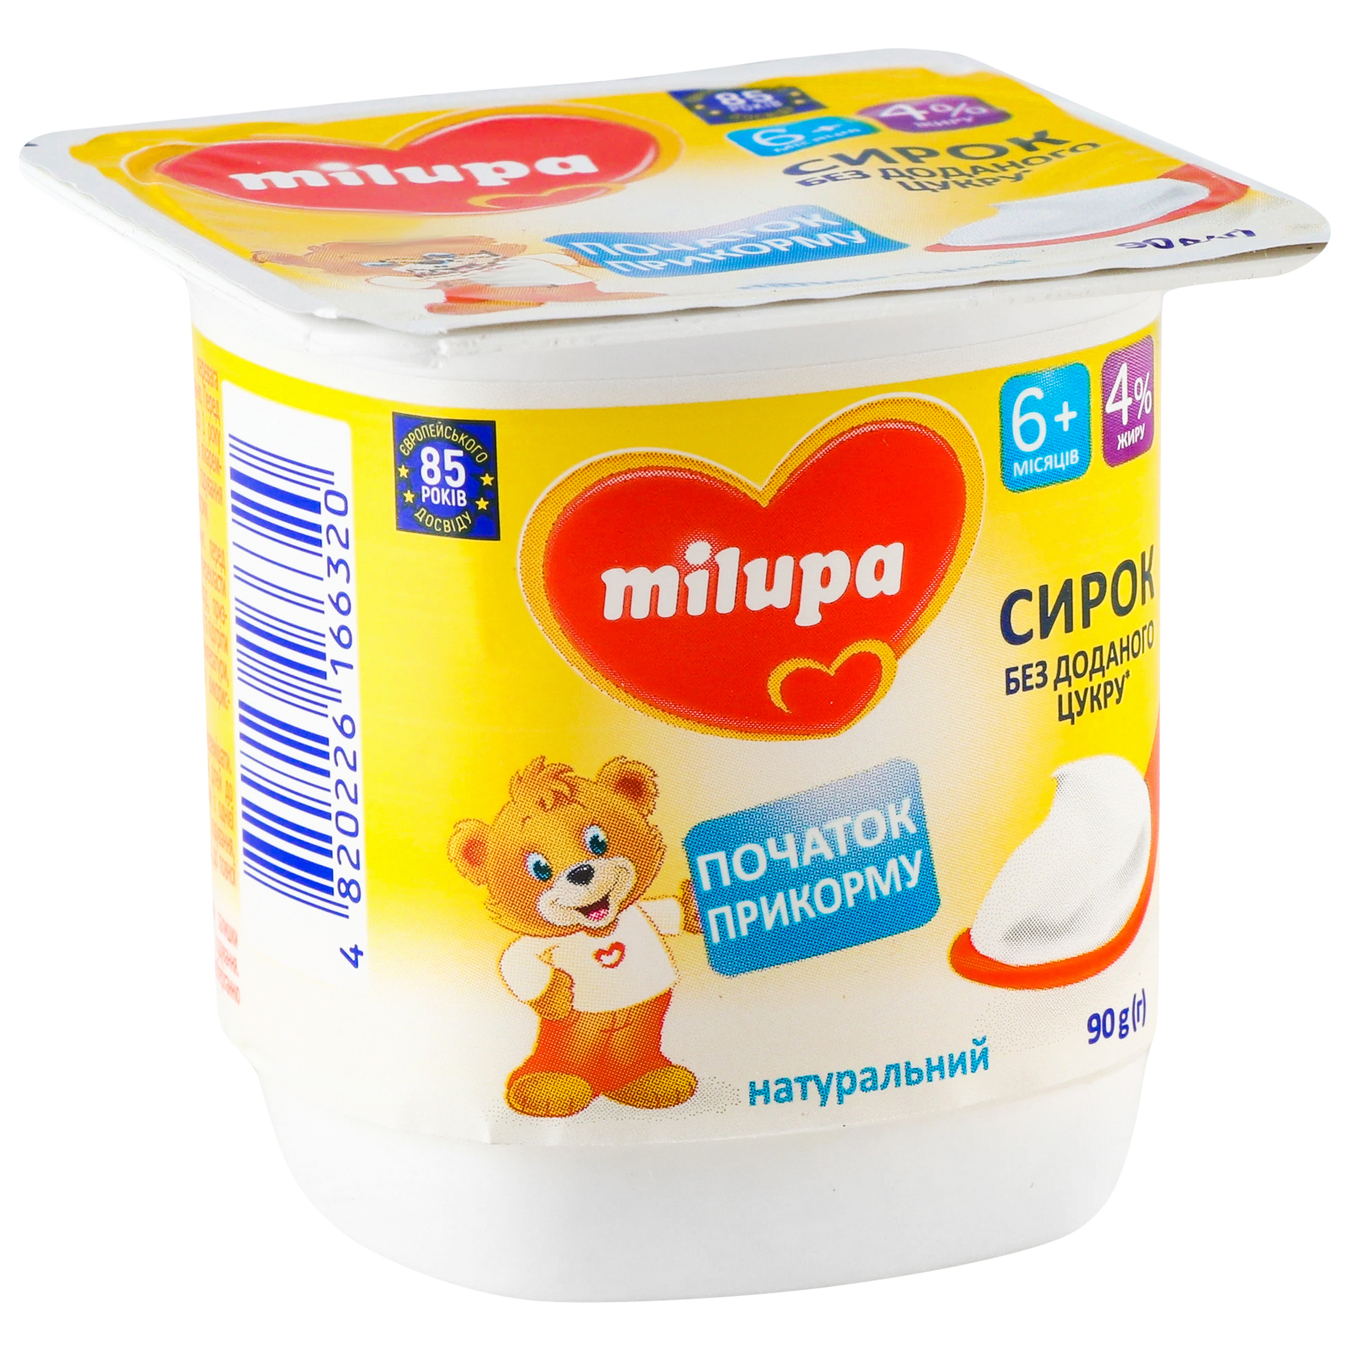 Milupa cheese with bifidobacteria natural 4% 90g 2